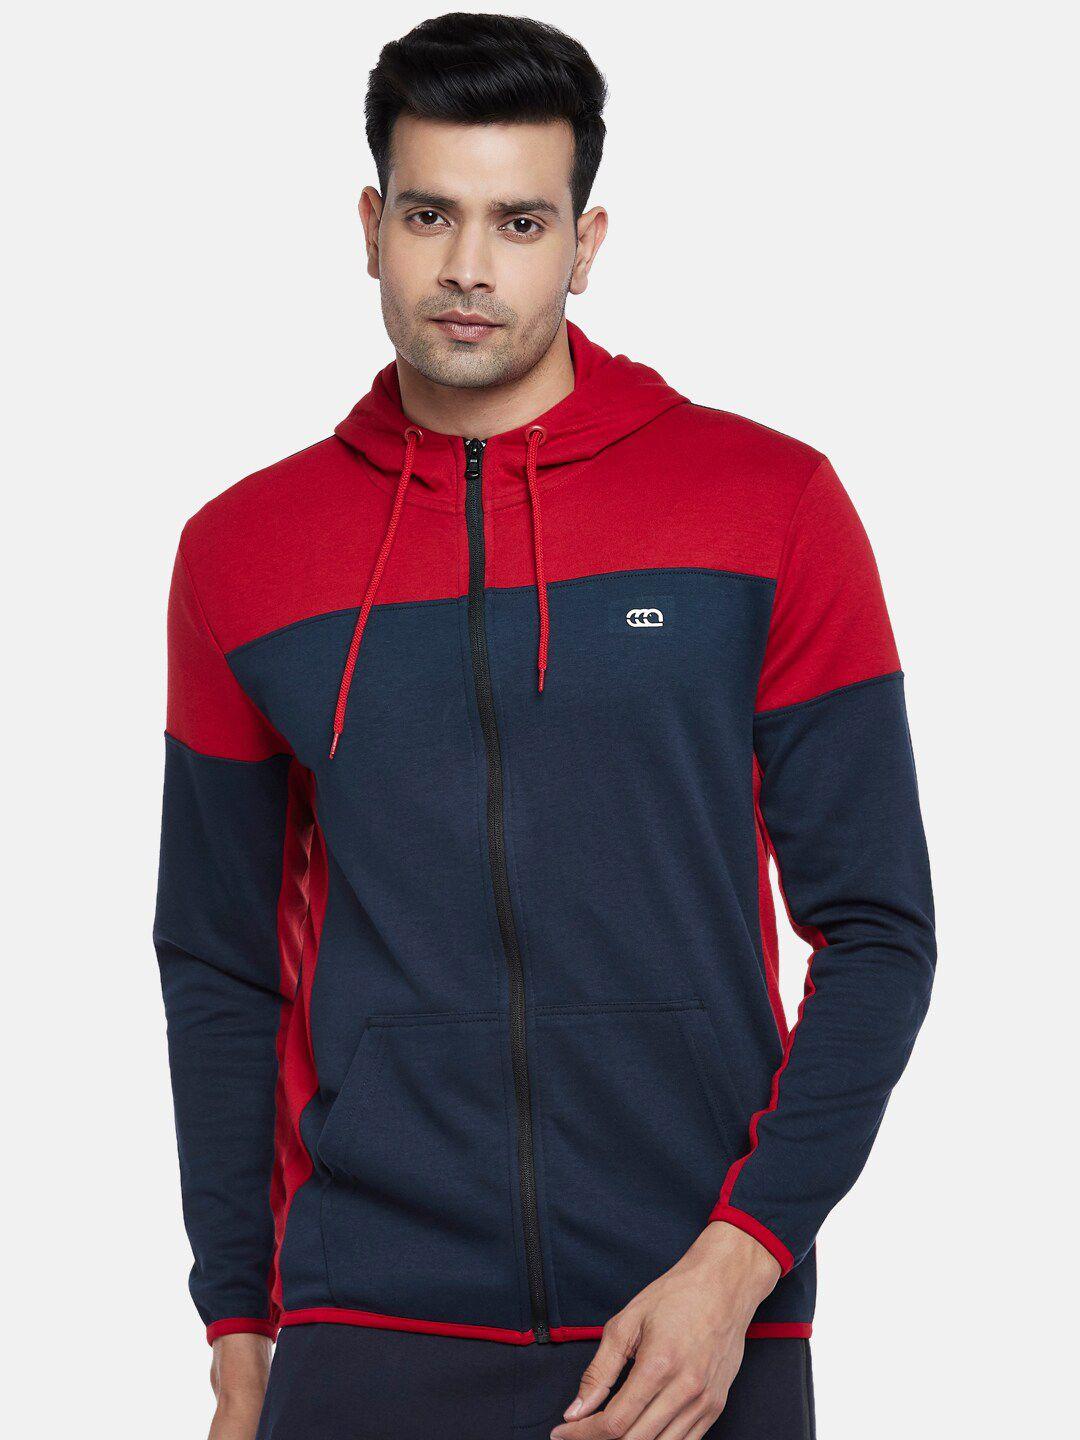 ajile by pantaloons men red & navy blue colourblocked sweatshirt